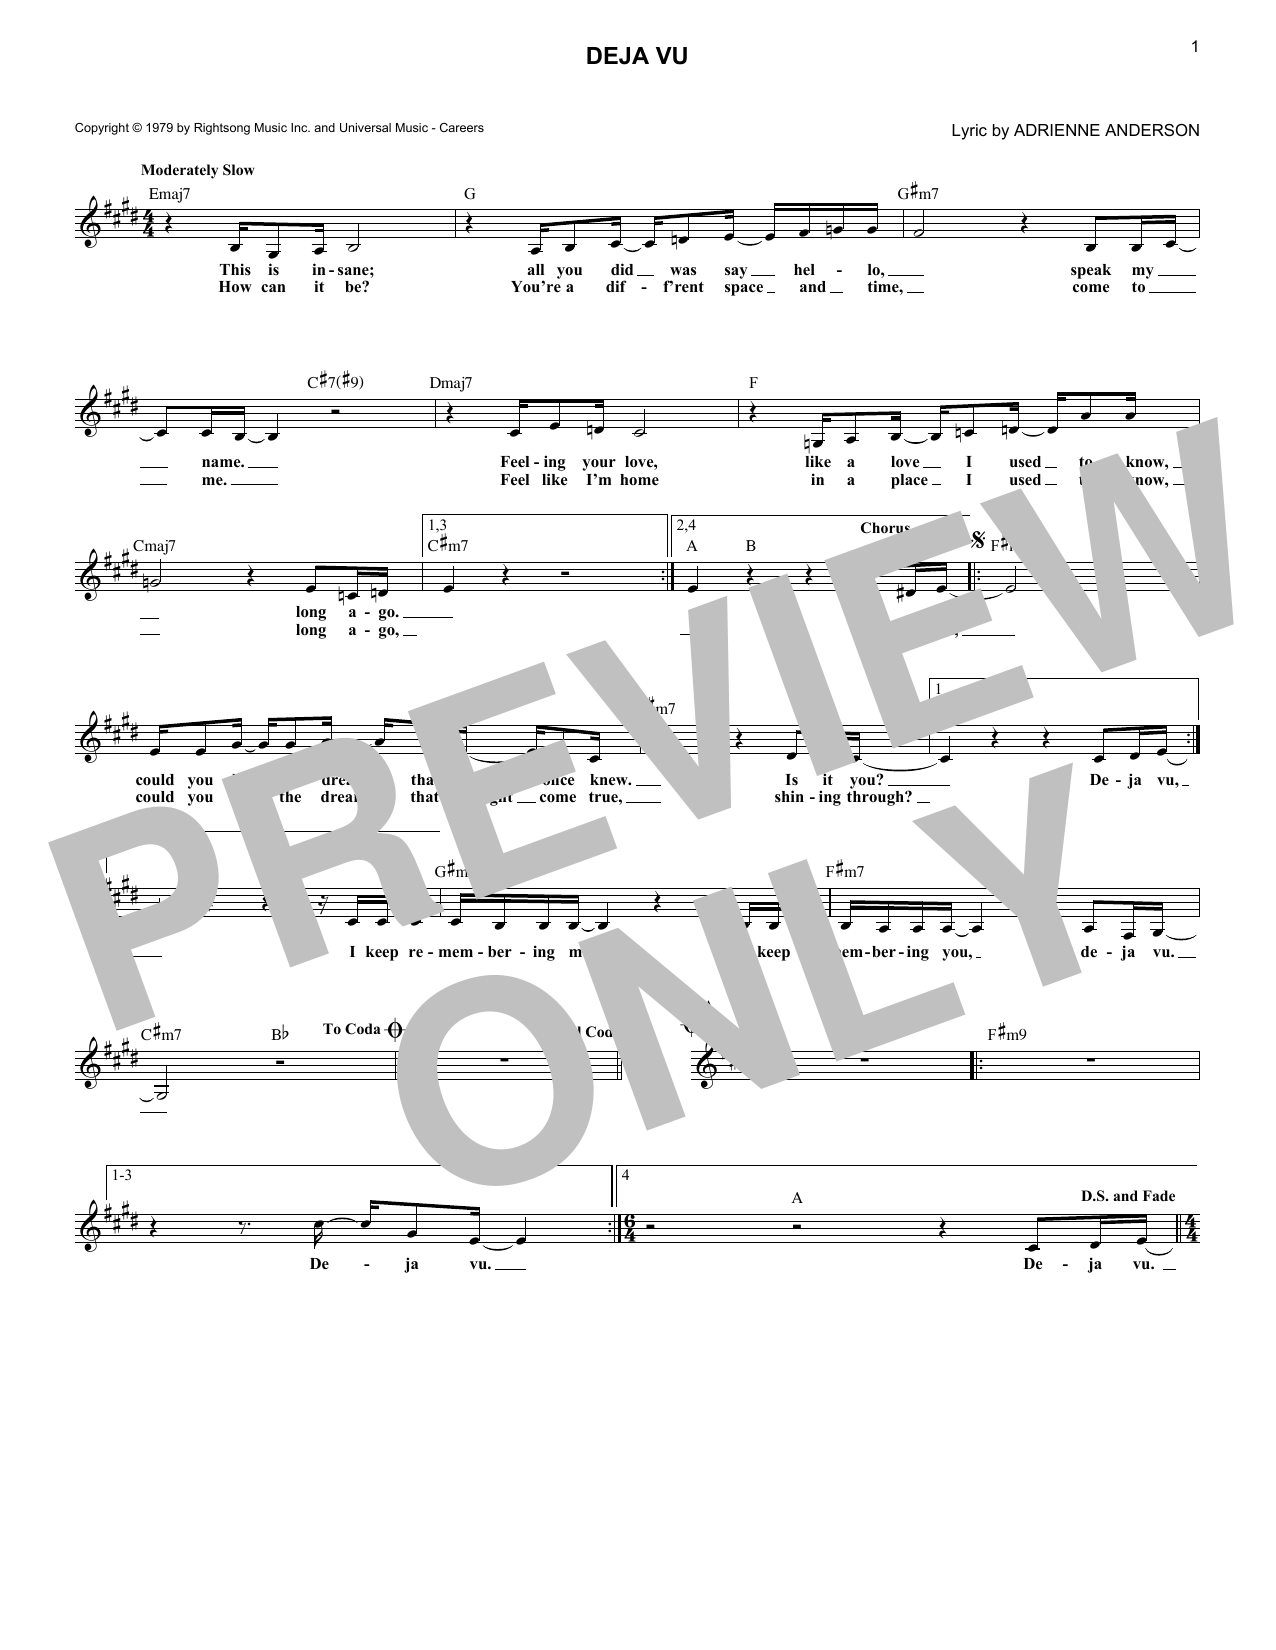 Dionne Warwick Deja Vu sheet music notes and chords arranged for Lead Sheet / Fake Book